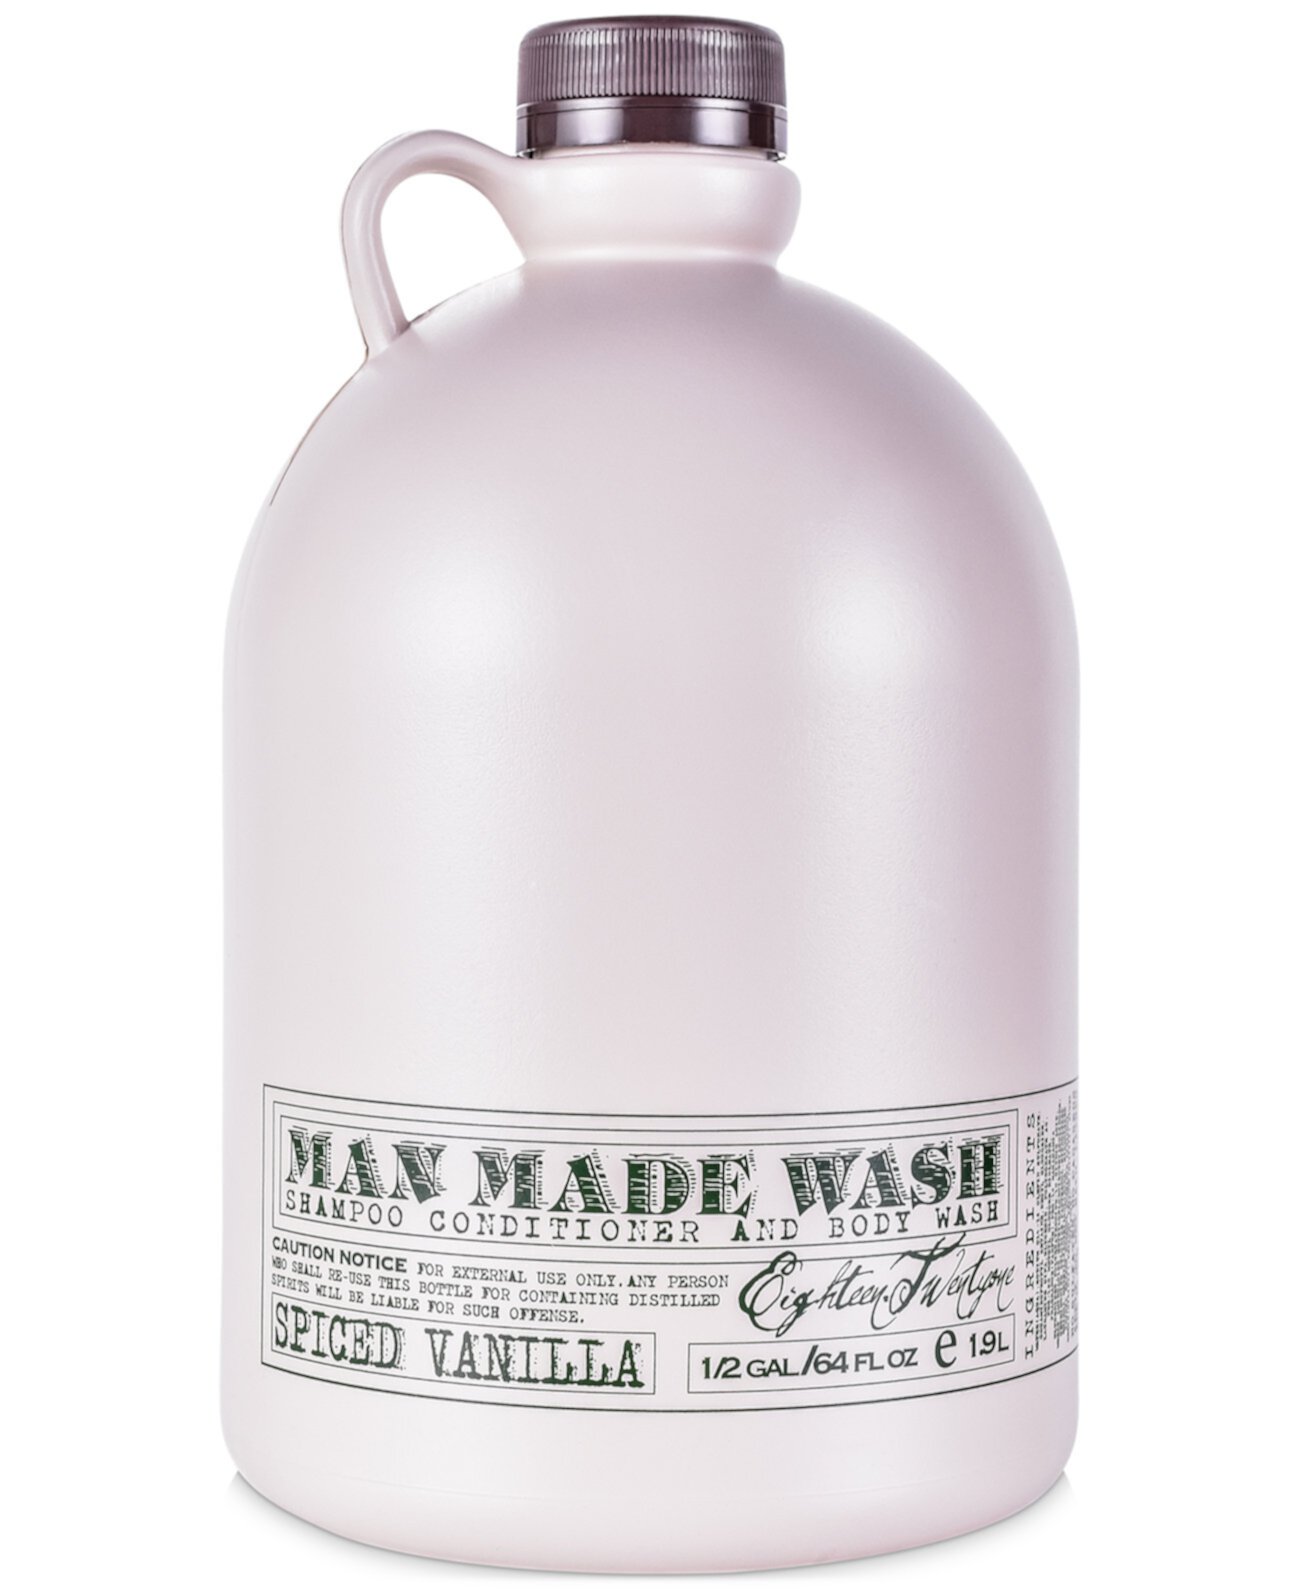 Wash - NEW Spiced Vanilla, 64 унции 18.21 Man Made